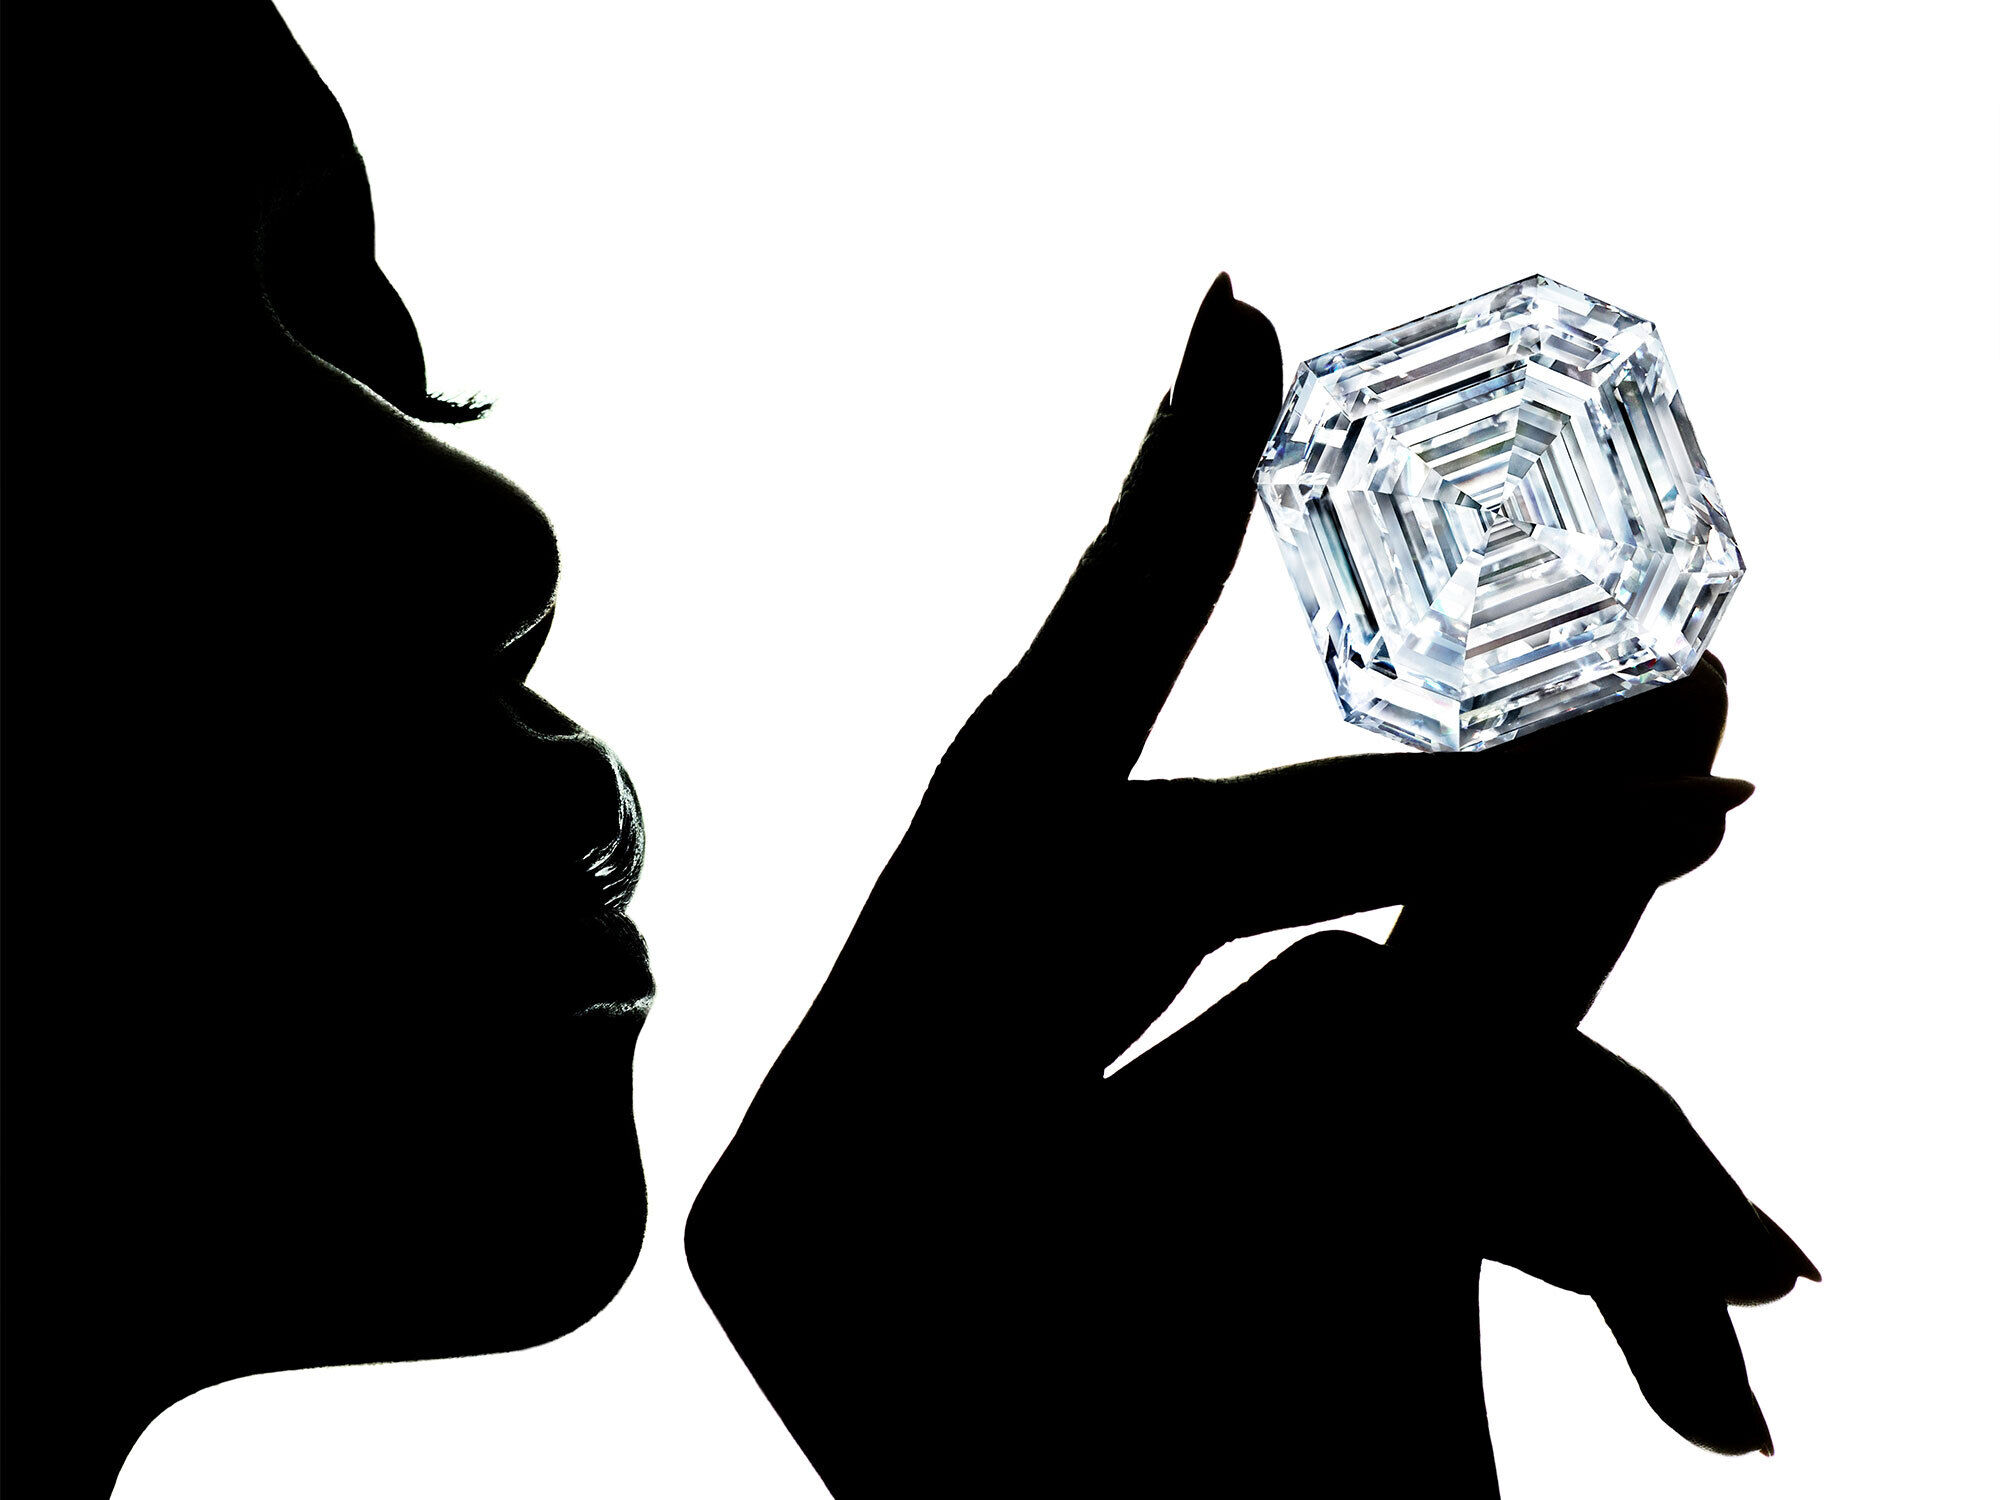 Shadow of model holding the Graff Lesedi La Rona diamond.